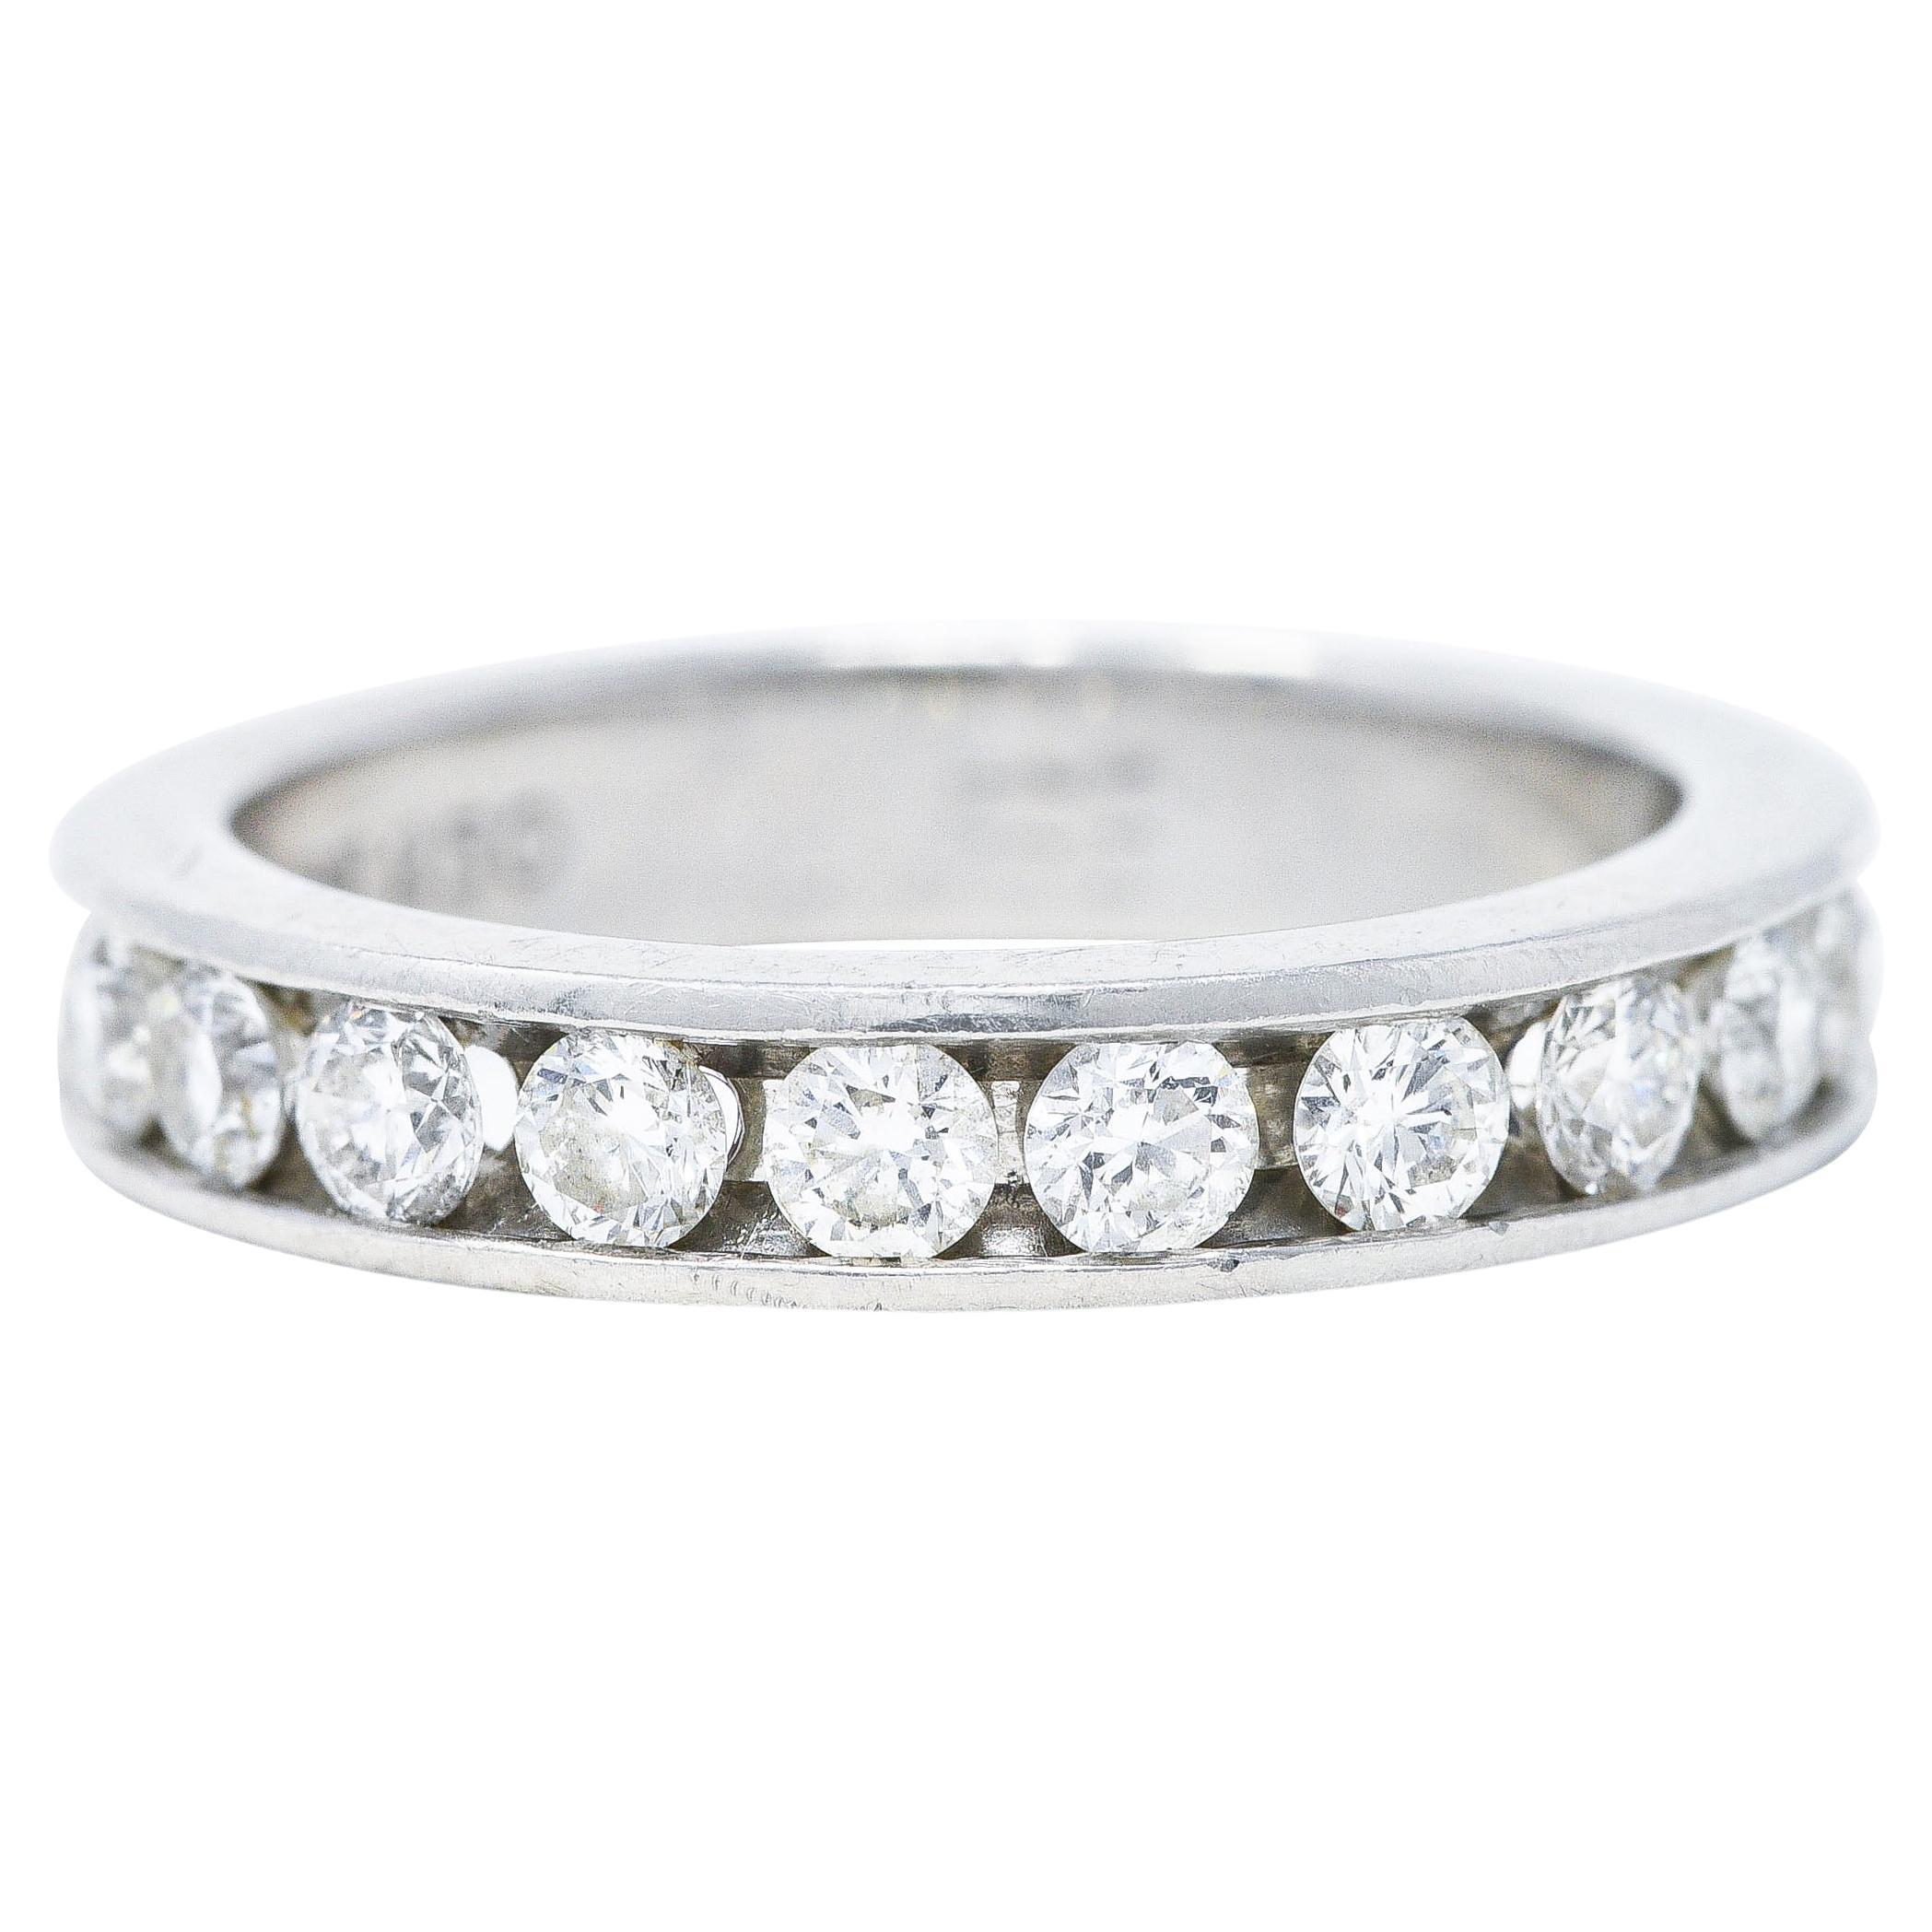 4 Carat Channel Set Baguette Cut Diamond Wedding Band Ring in Platinum ...